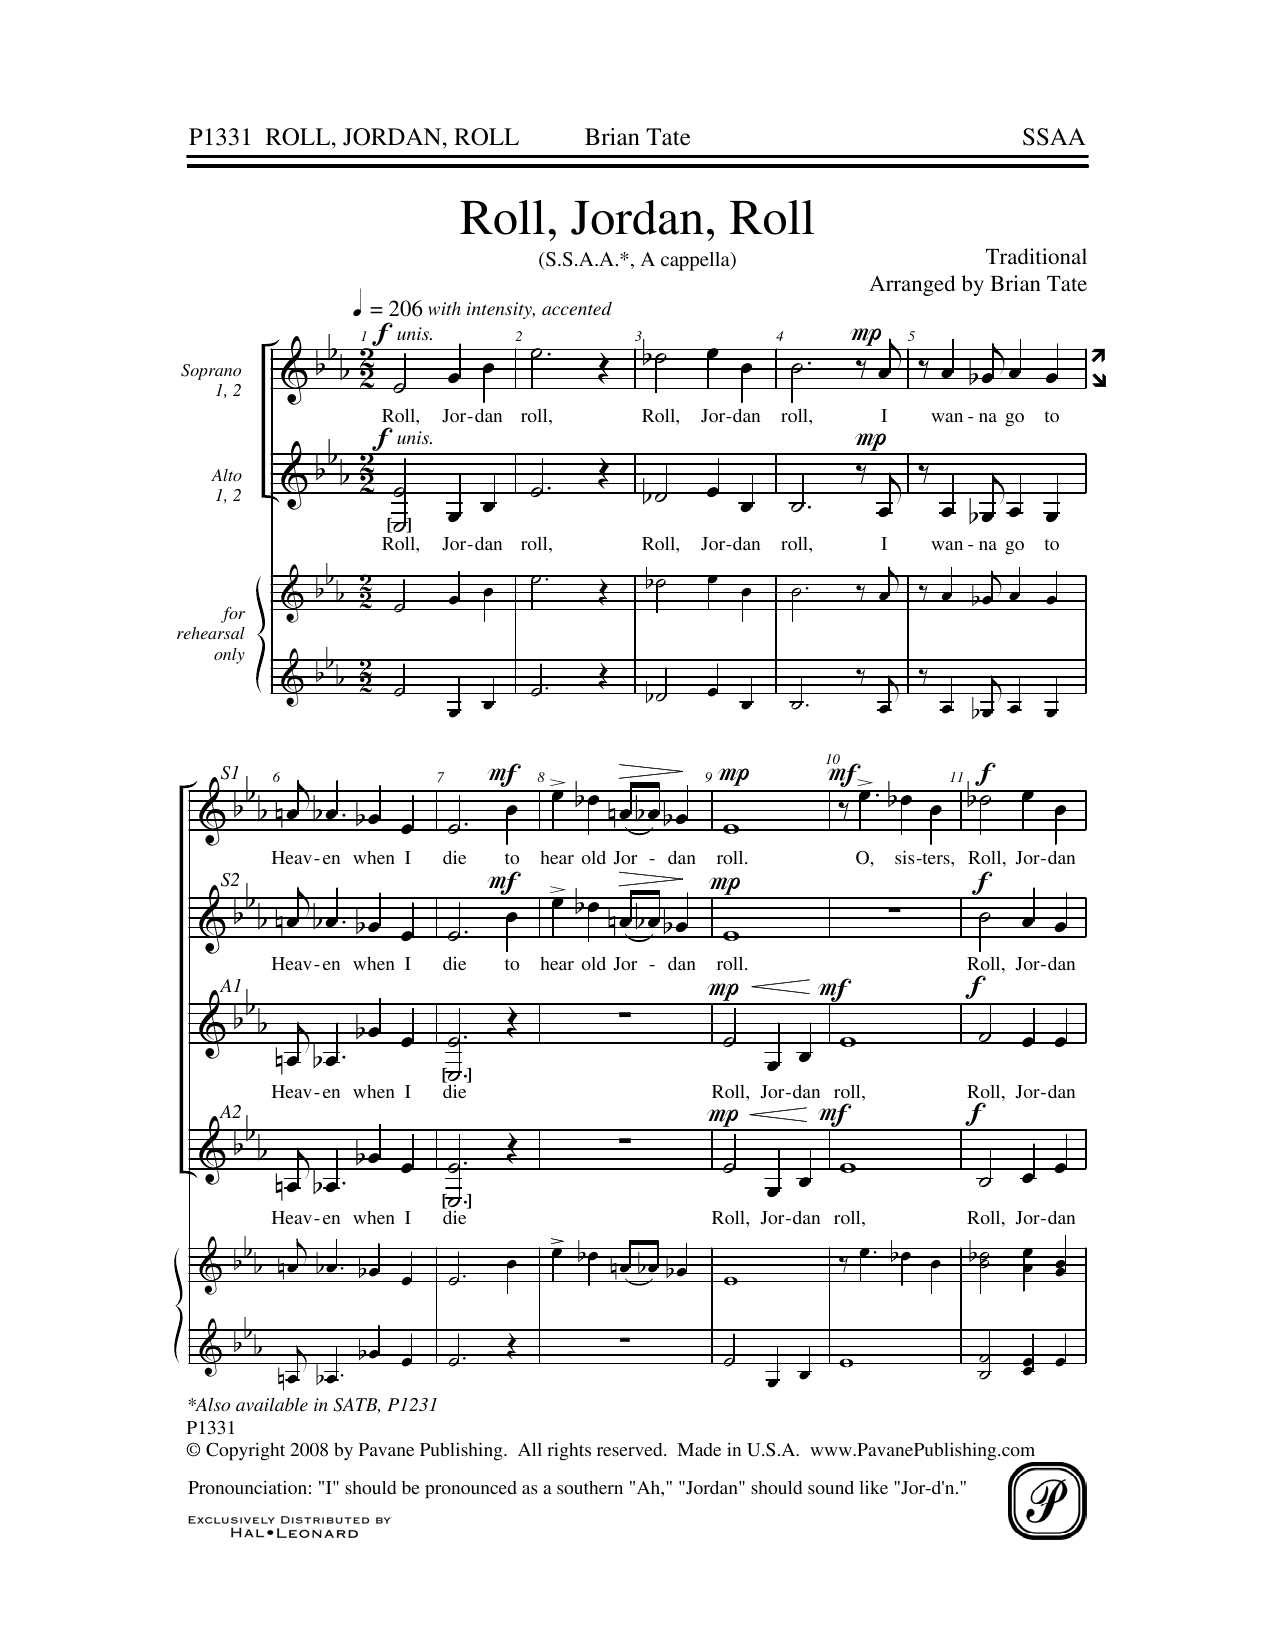 Brian Tate Roll, Jordan, Roll sheet music notes and chords arranged for SSA Choir